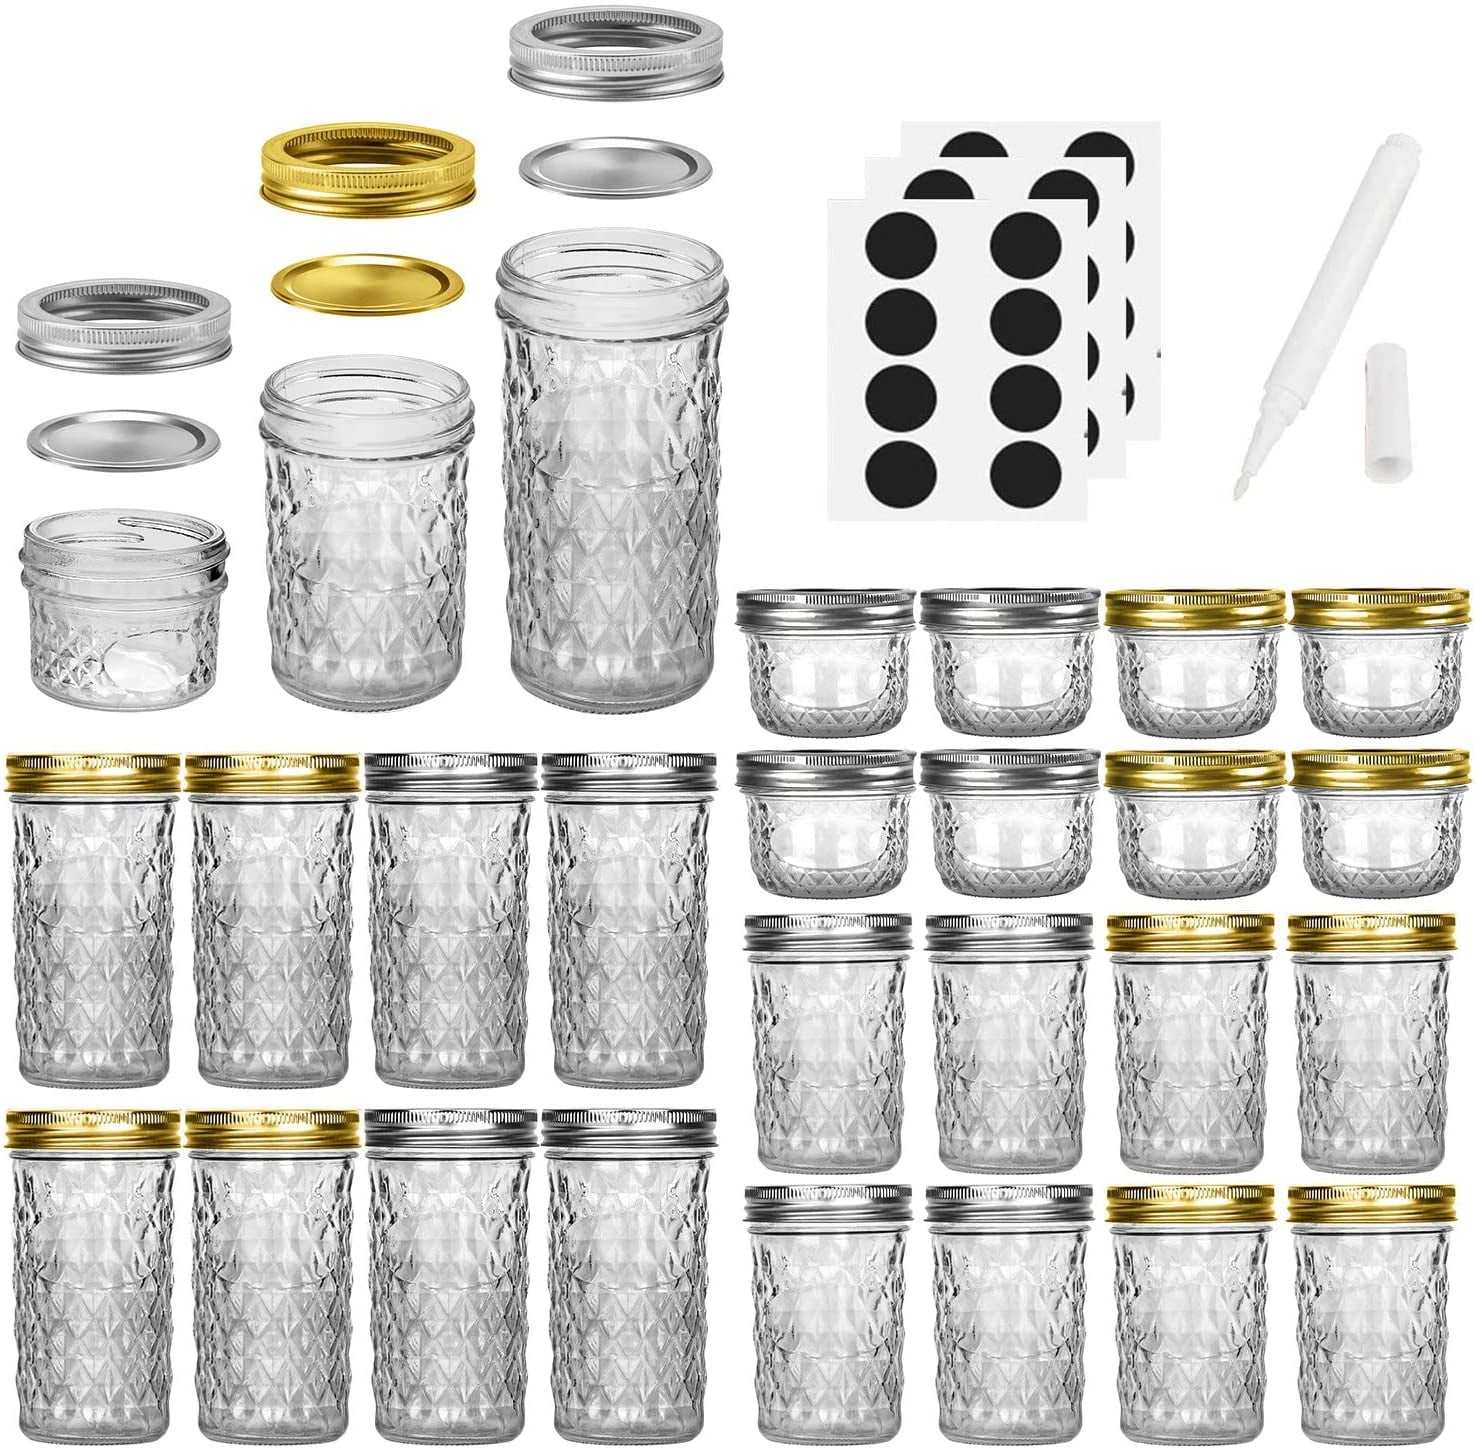 TANGLONG Mason Jars 8 oz Set of 24,Small Mason Jars,Spice Jars,8 oz Mason  Jars with Lids,Small Jars with Lids,8 oz Glass Jars,Small Glass Jars with